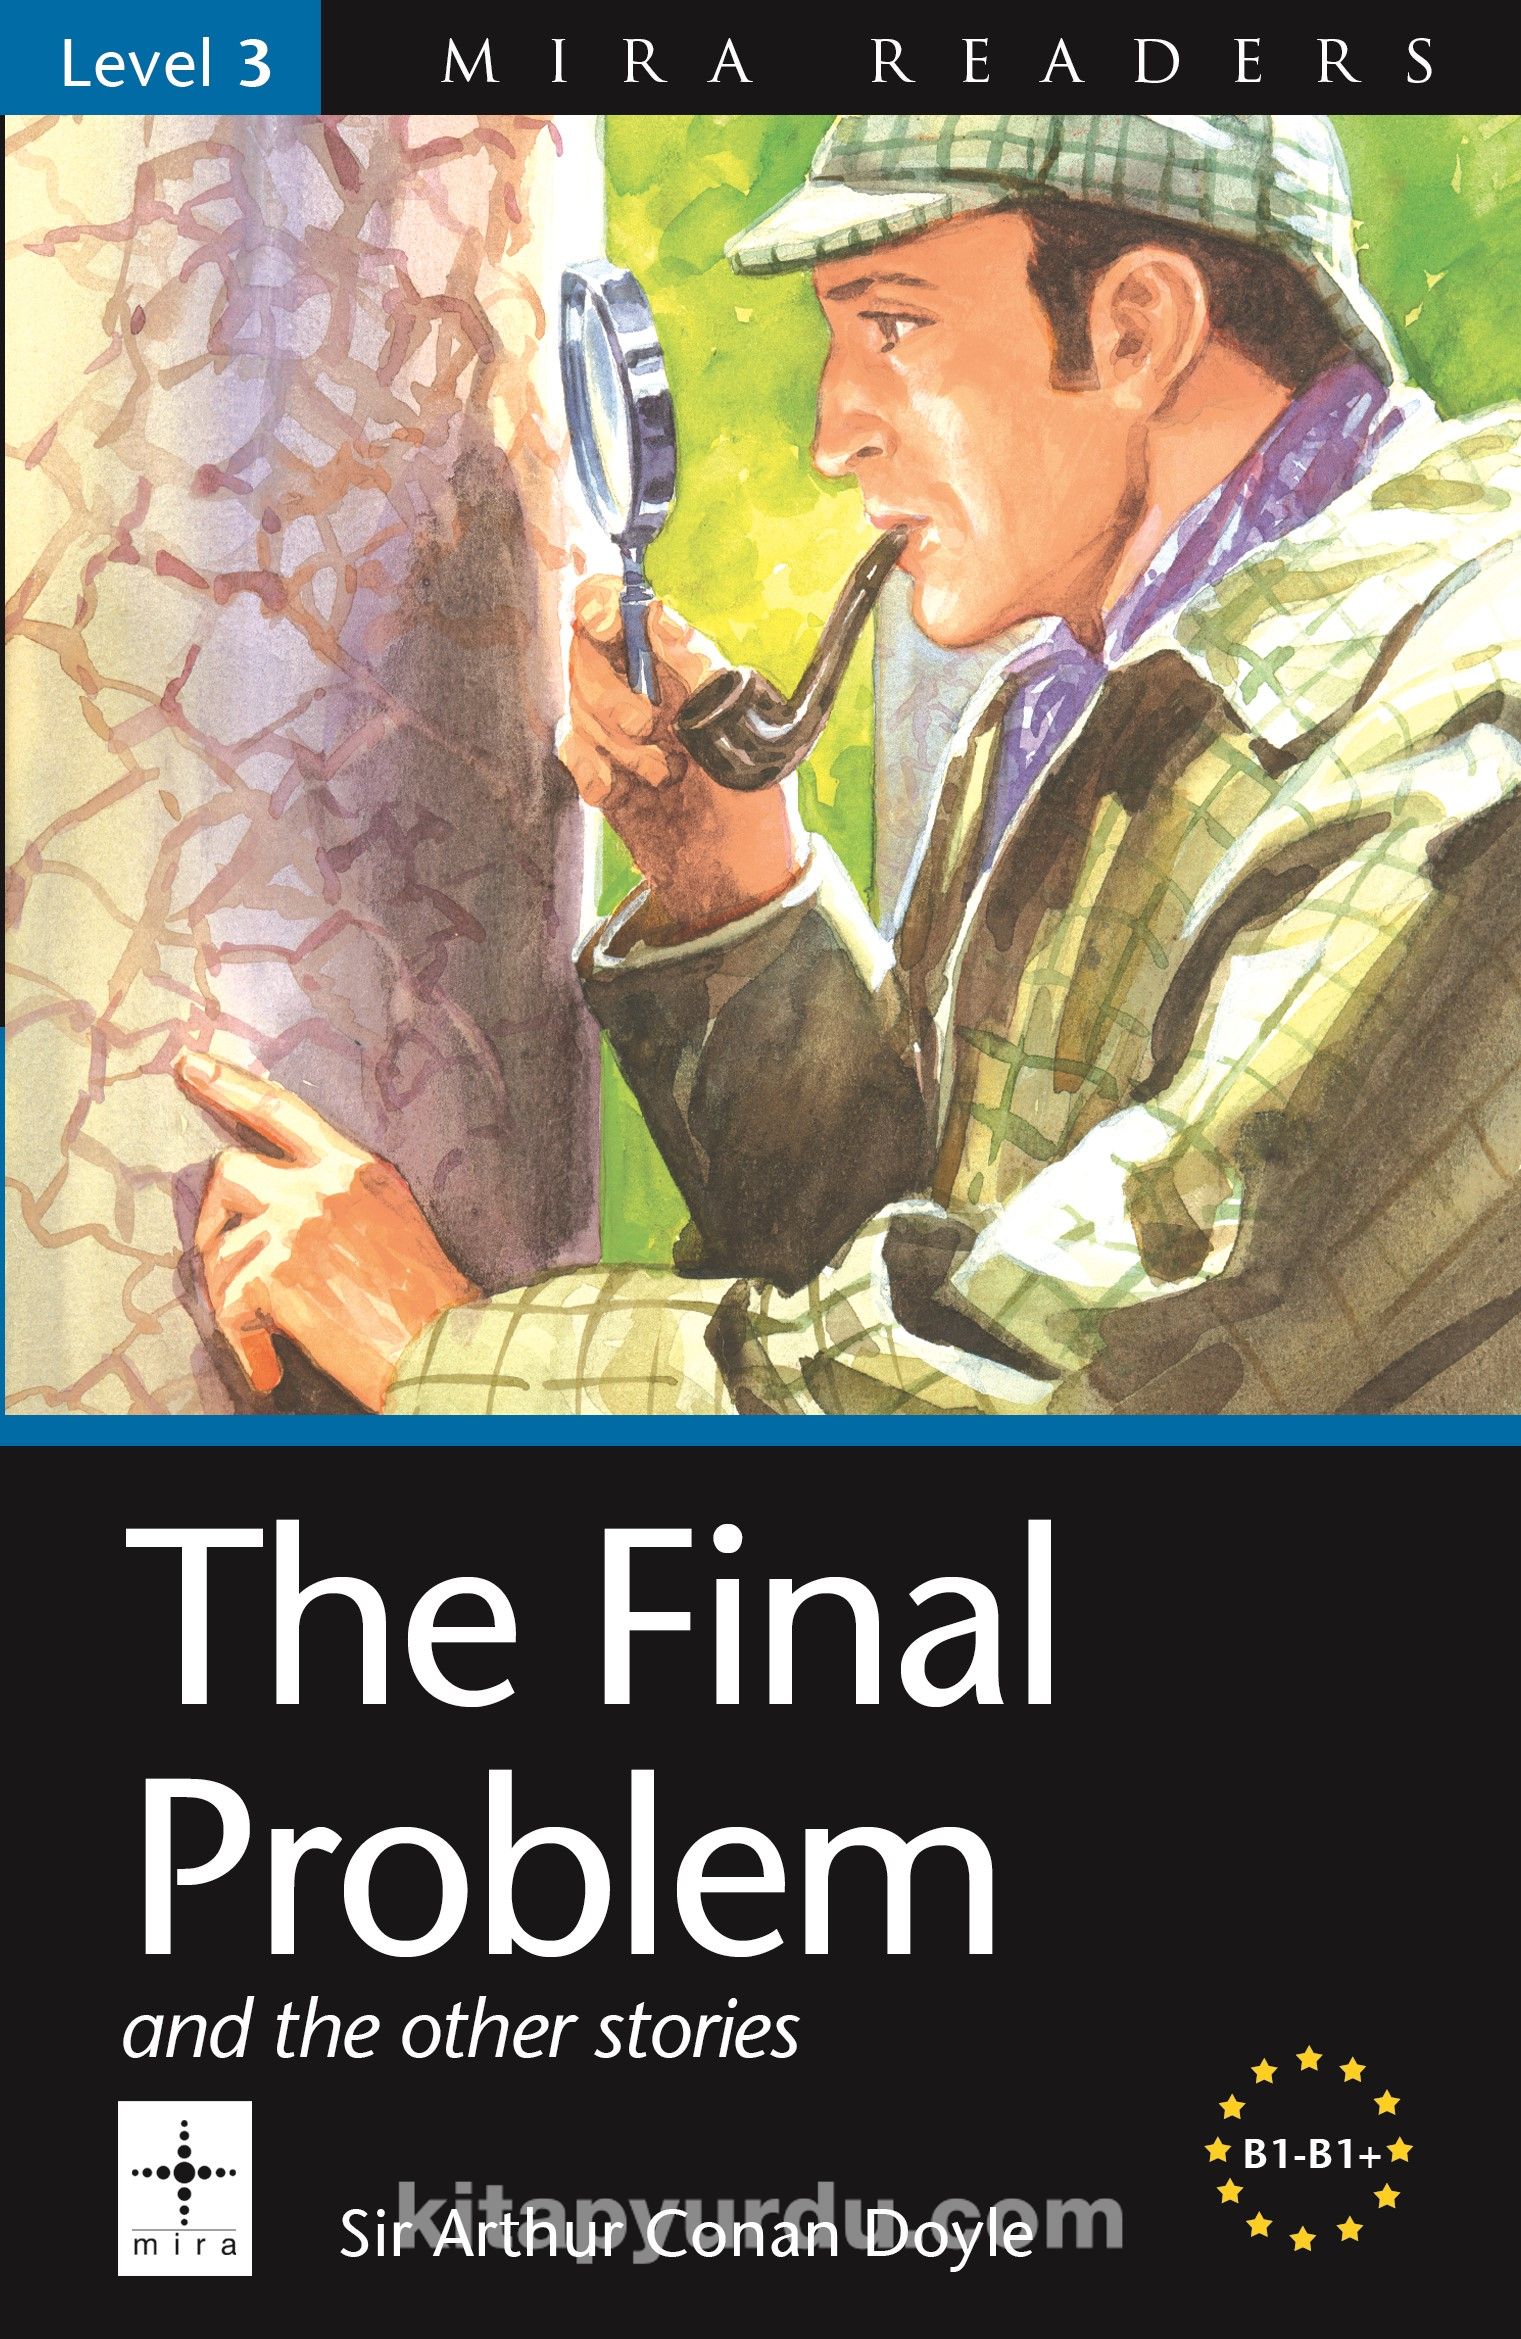 Final problem. Conan Doyle "the last problem".